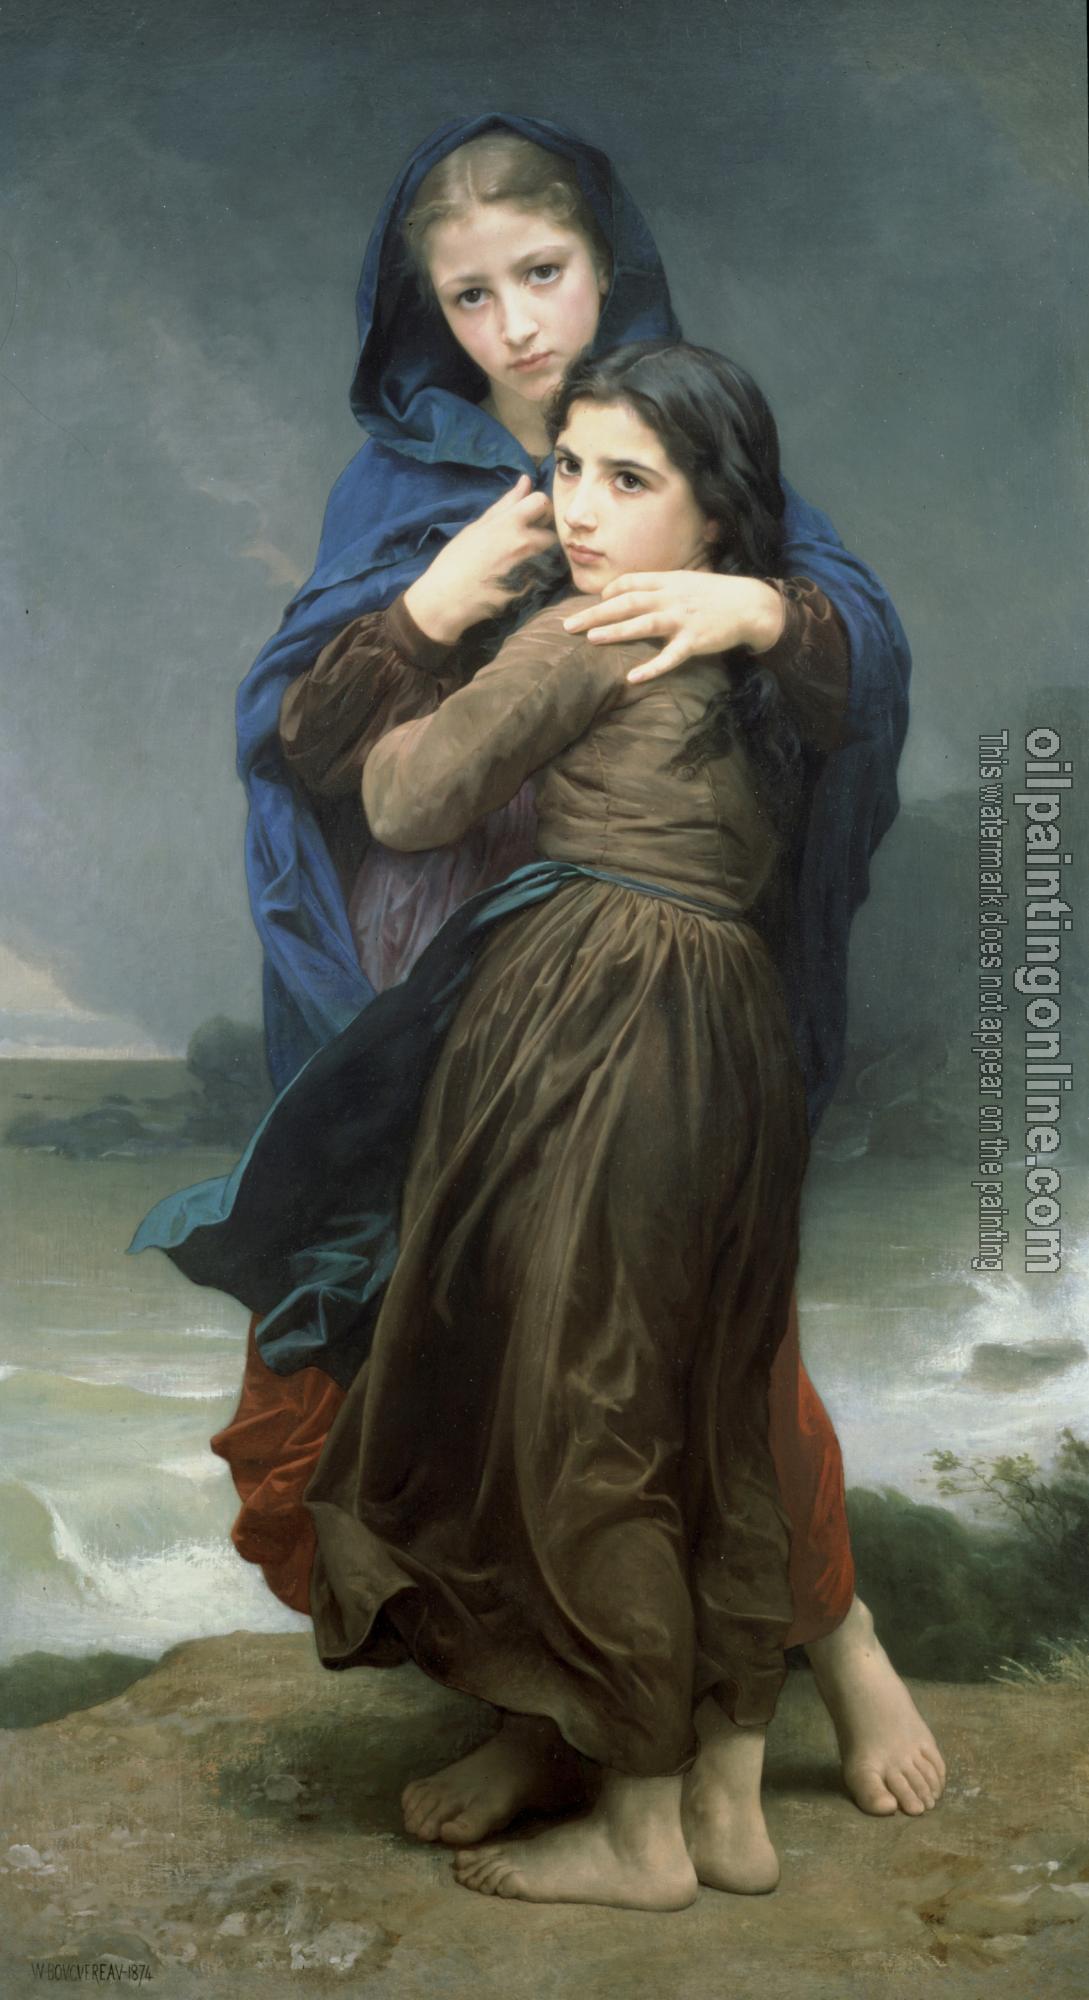 Bouguereau, William-Adolphe - The Storm